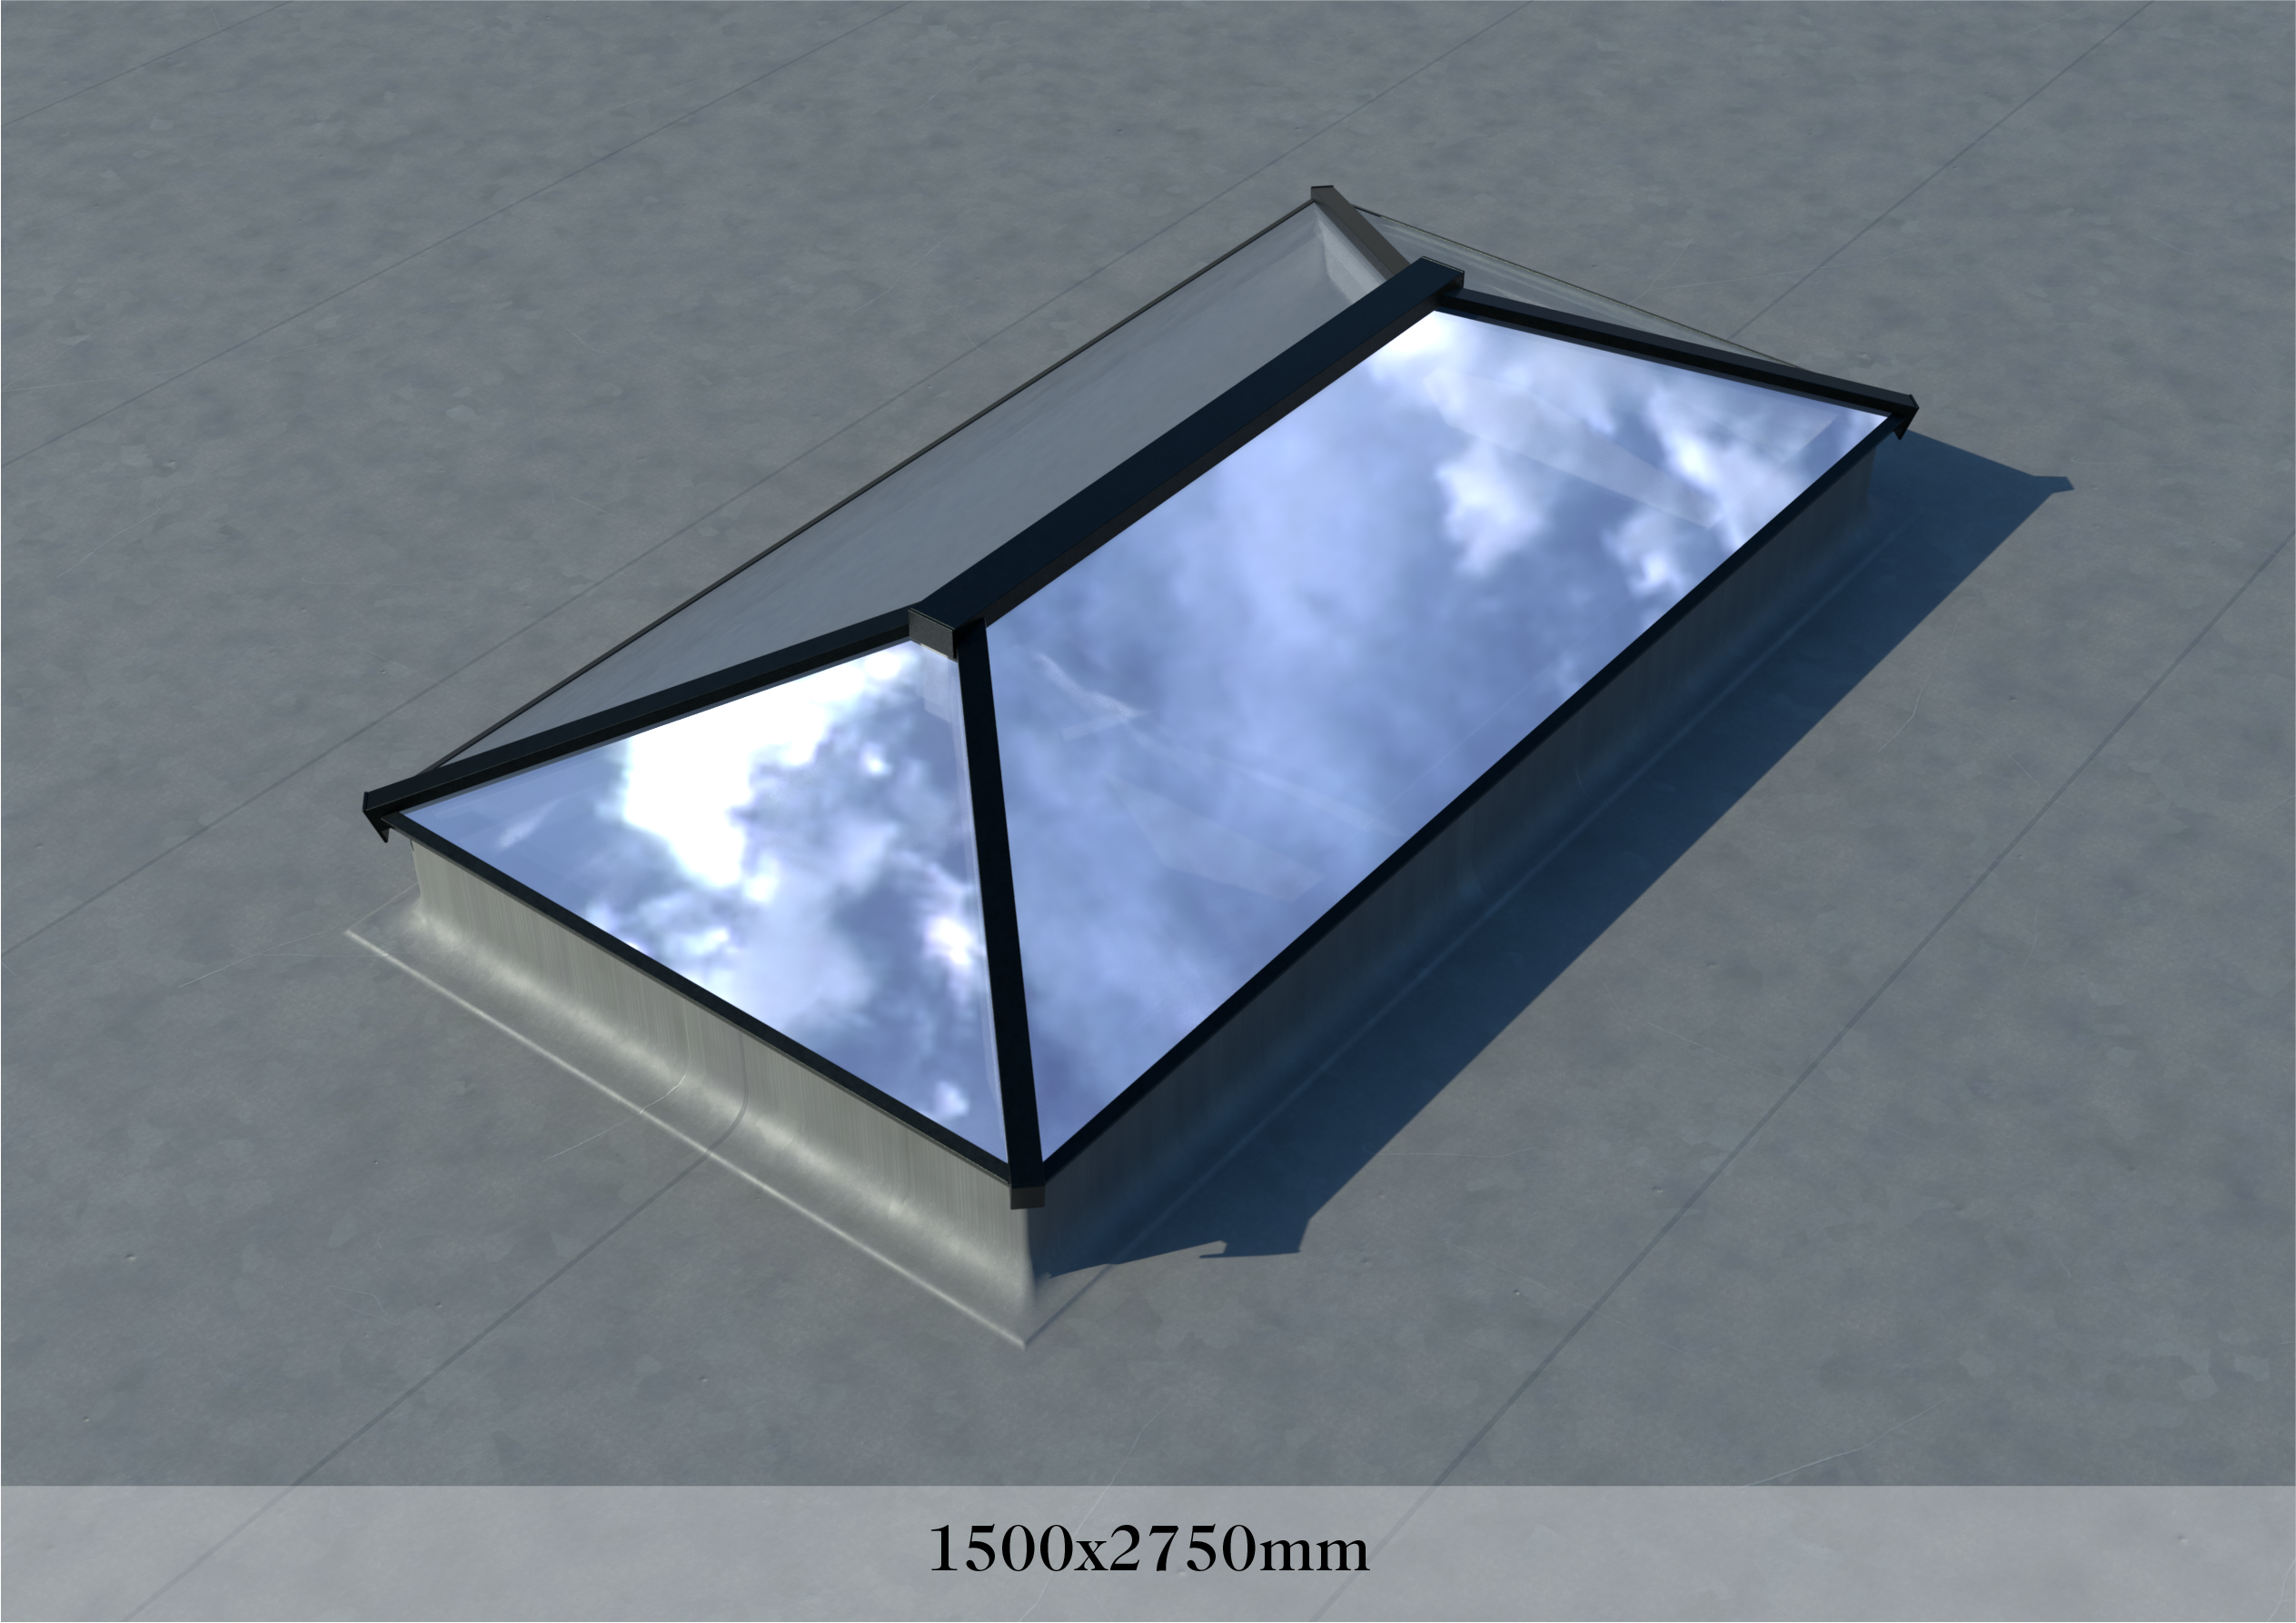 Contemporary Roof Lantern 1500 x 2750mm